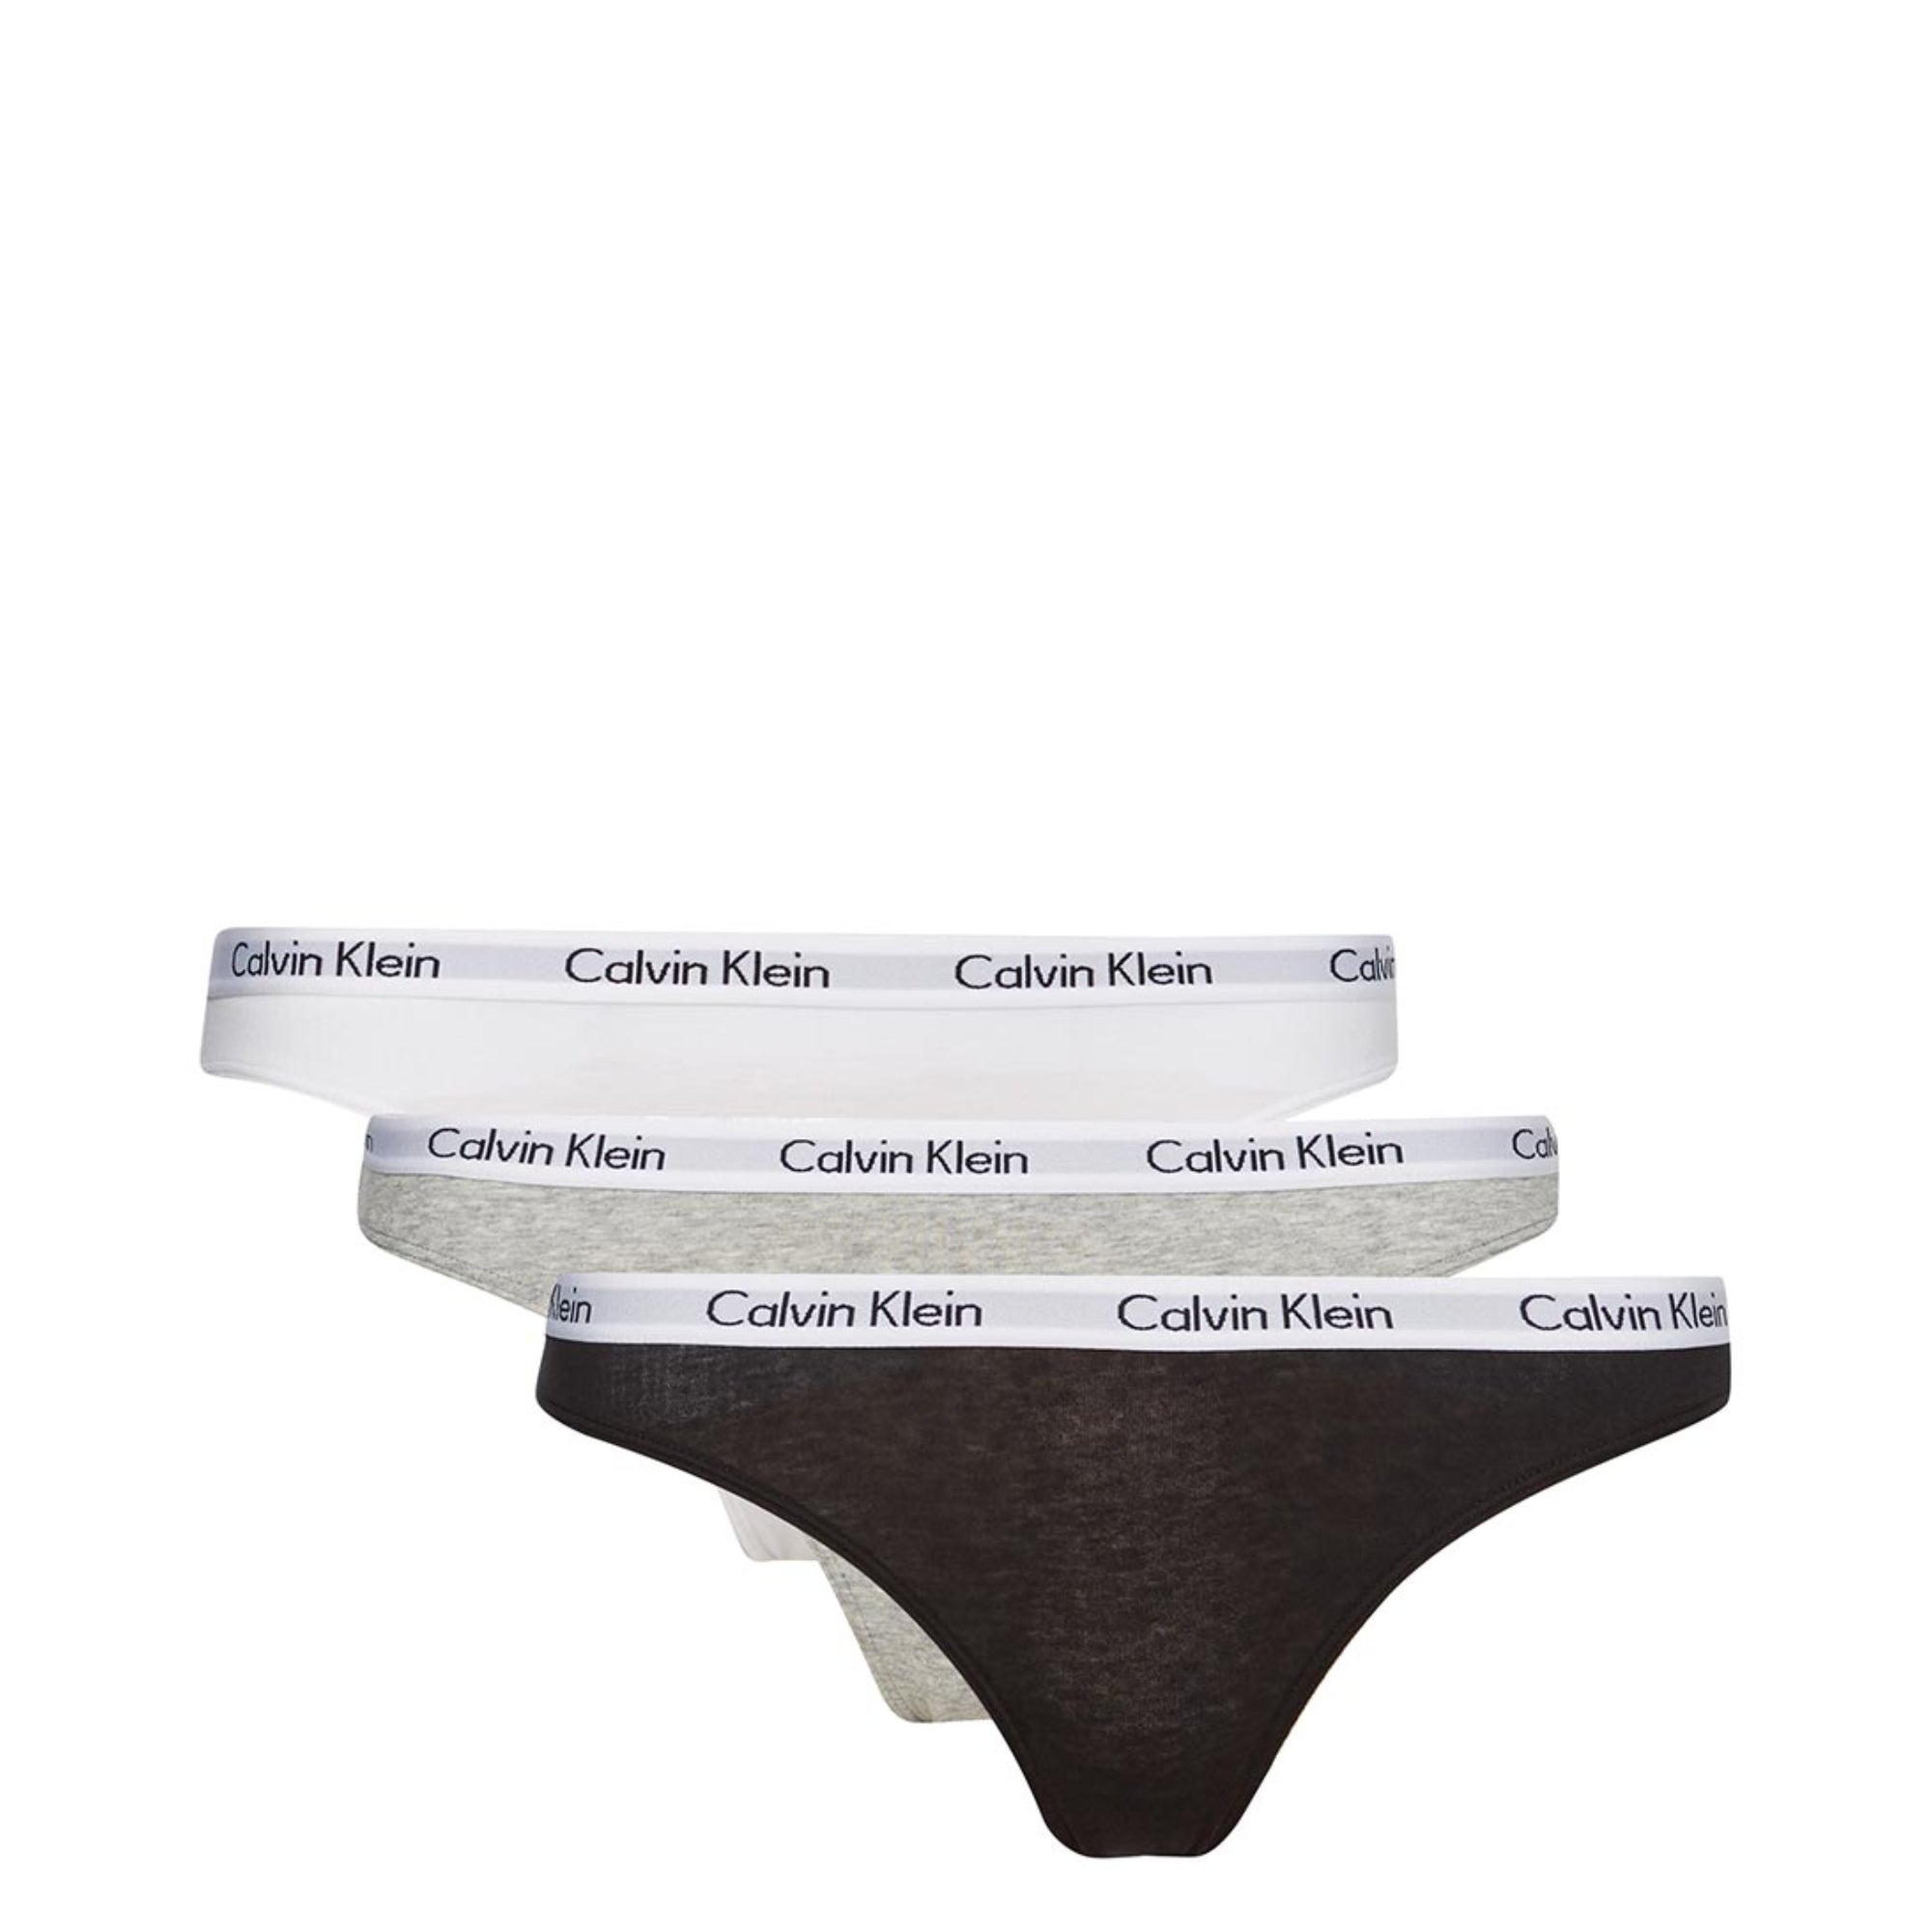 Calvin Klein Women's Multi-color 3 Pack of High Waist Thong